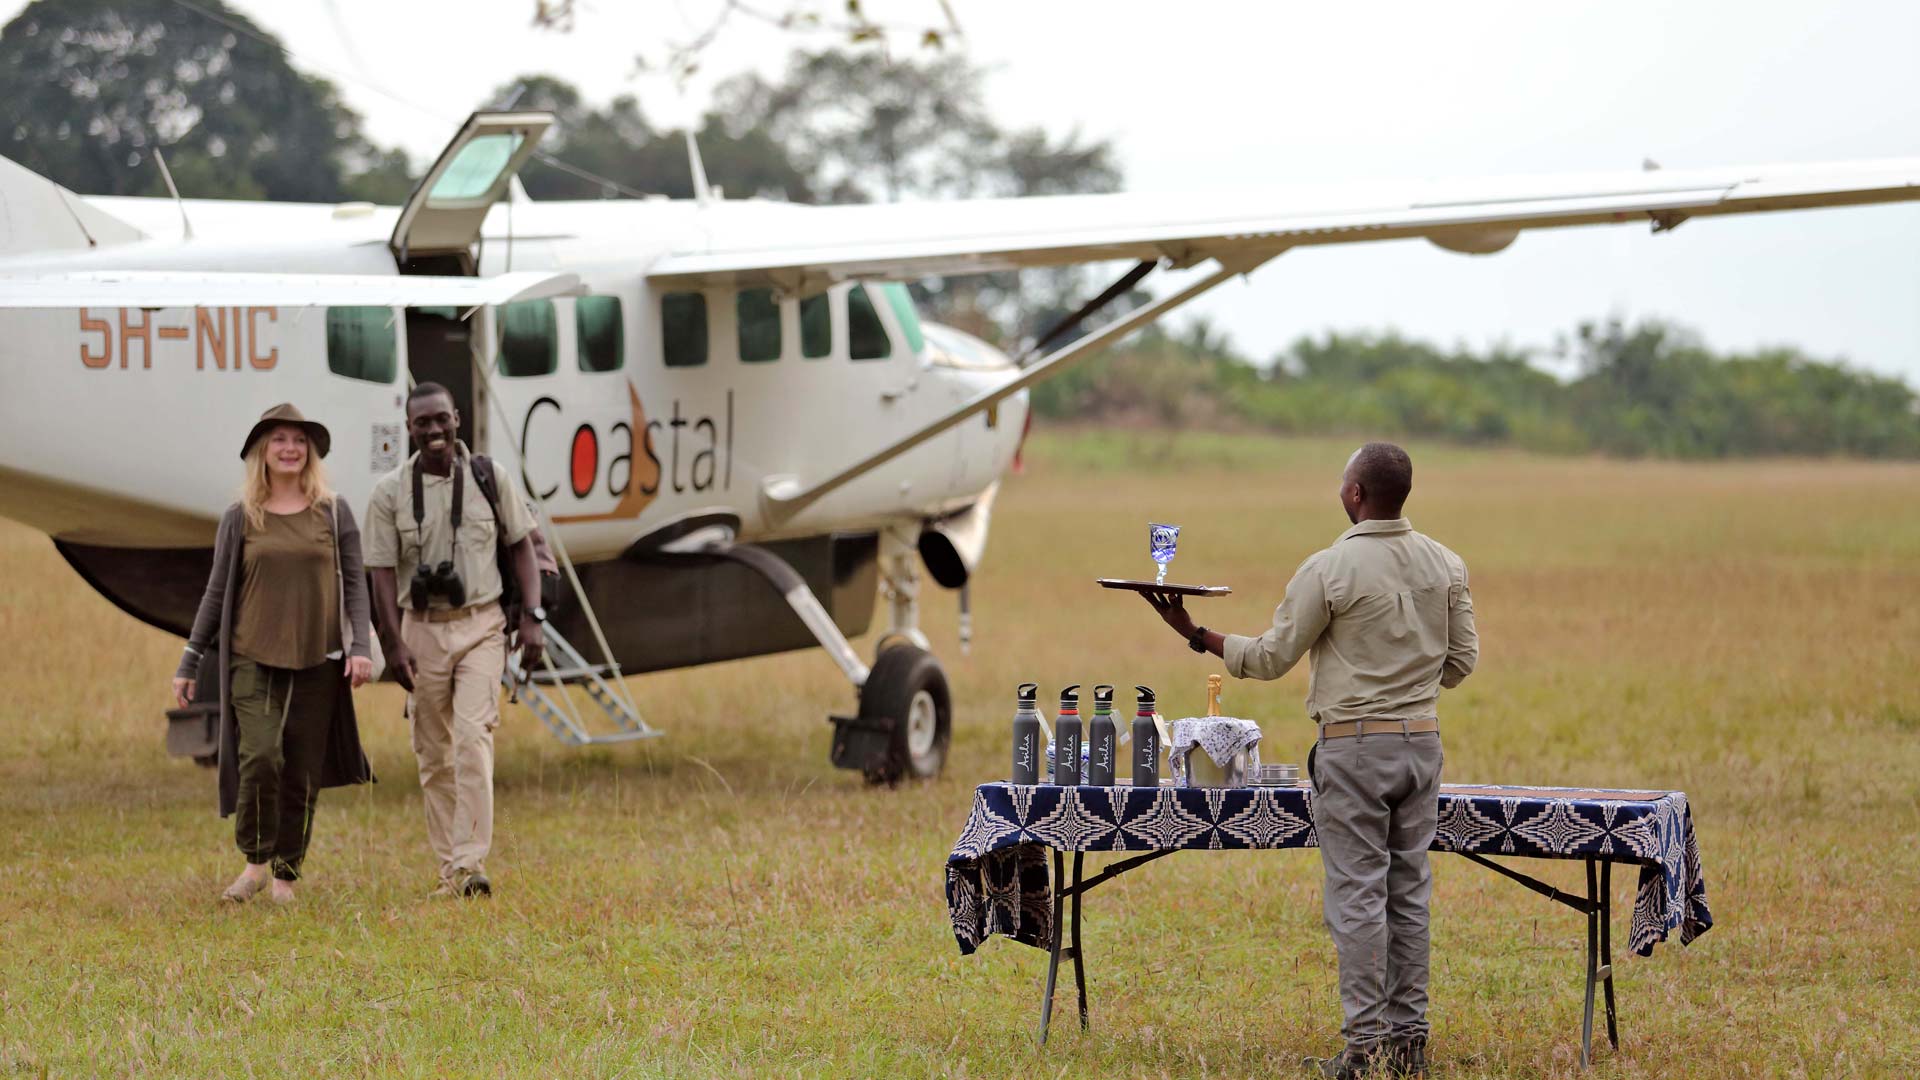 Cessna C208 - drinks on arrival